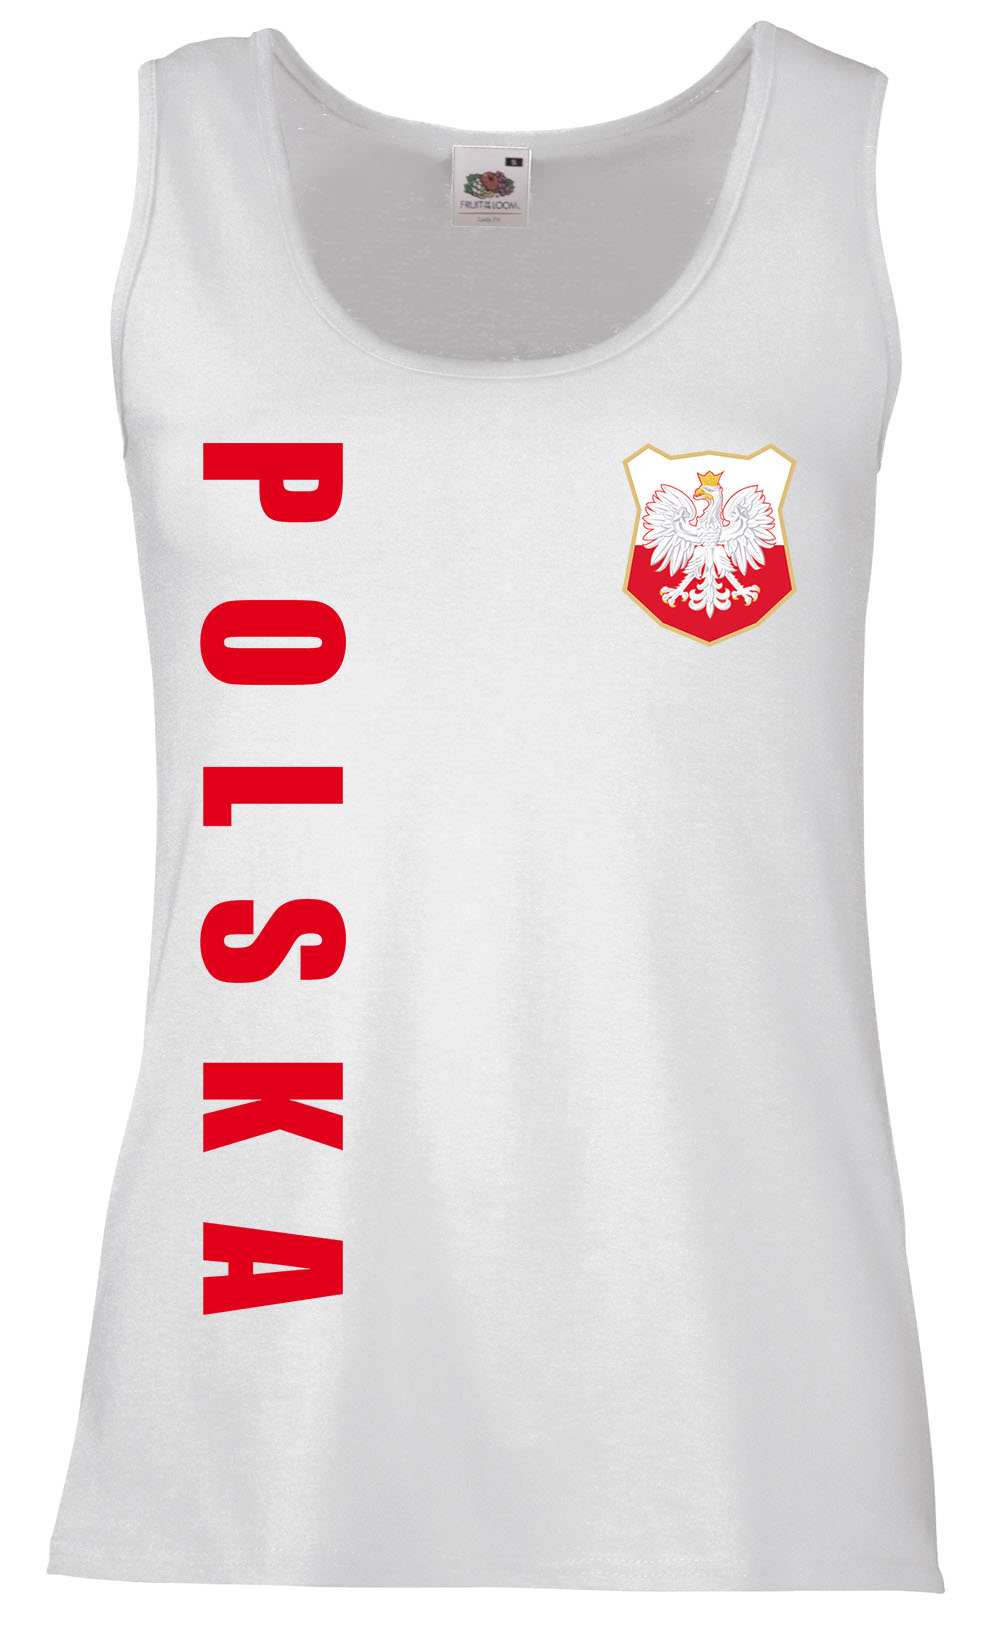 Polen  Fanshirt Trikot WM2018 S M L XL XXL 